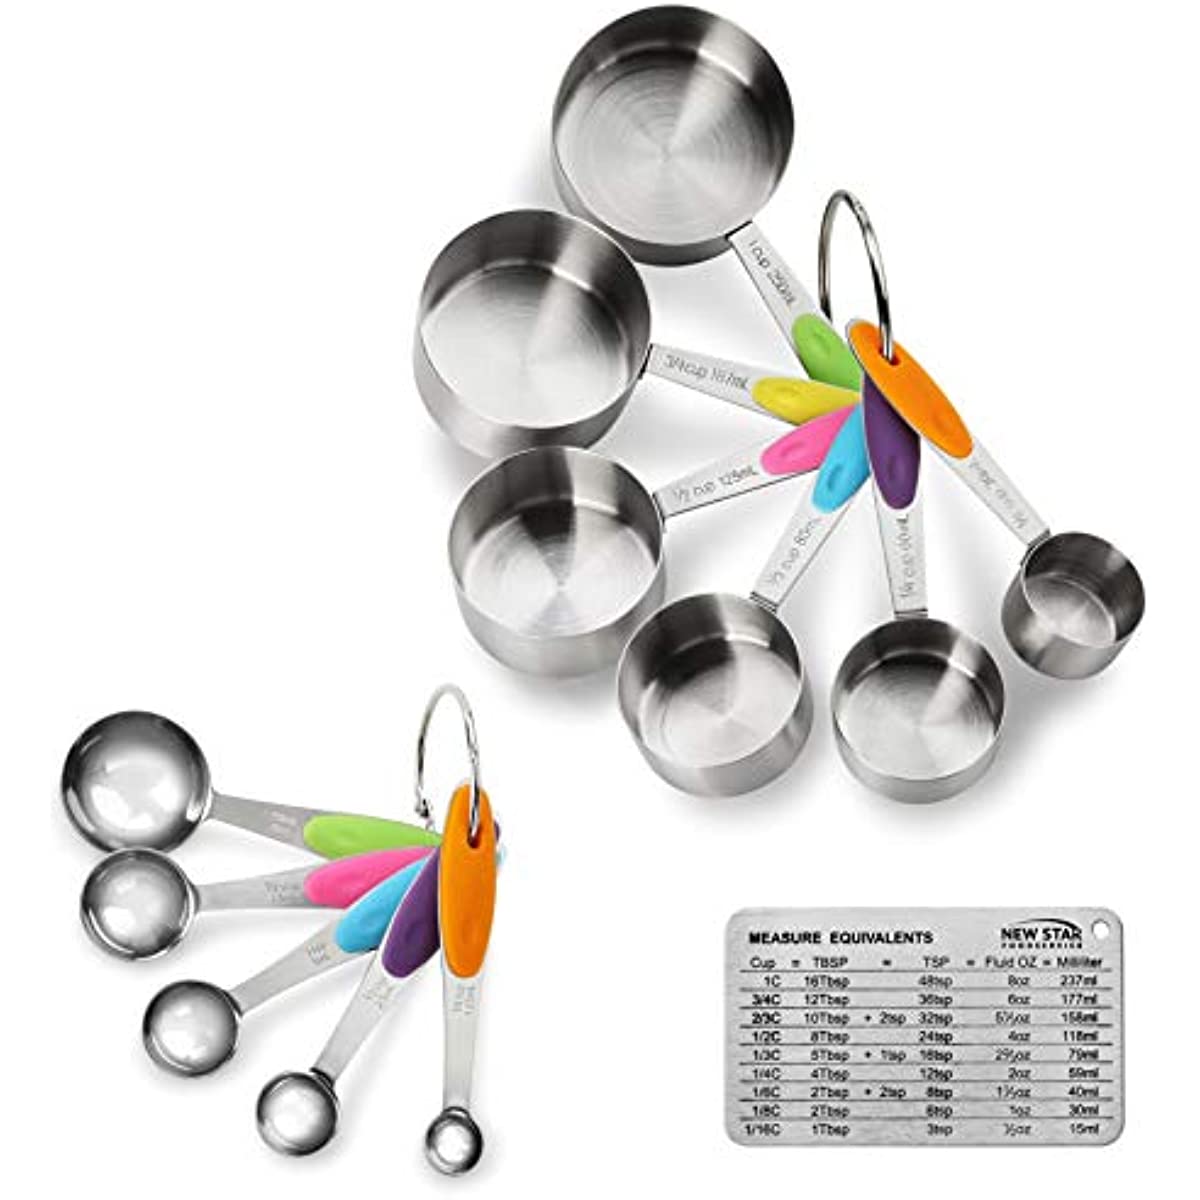 500g Digital Measuring Spoon & Cup Set – Pie Maker Stuff